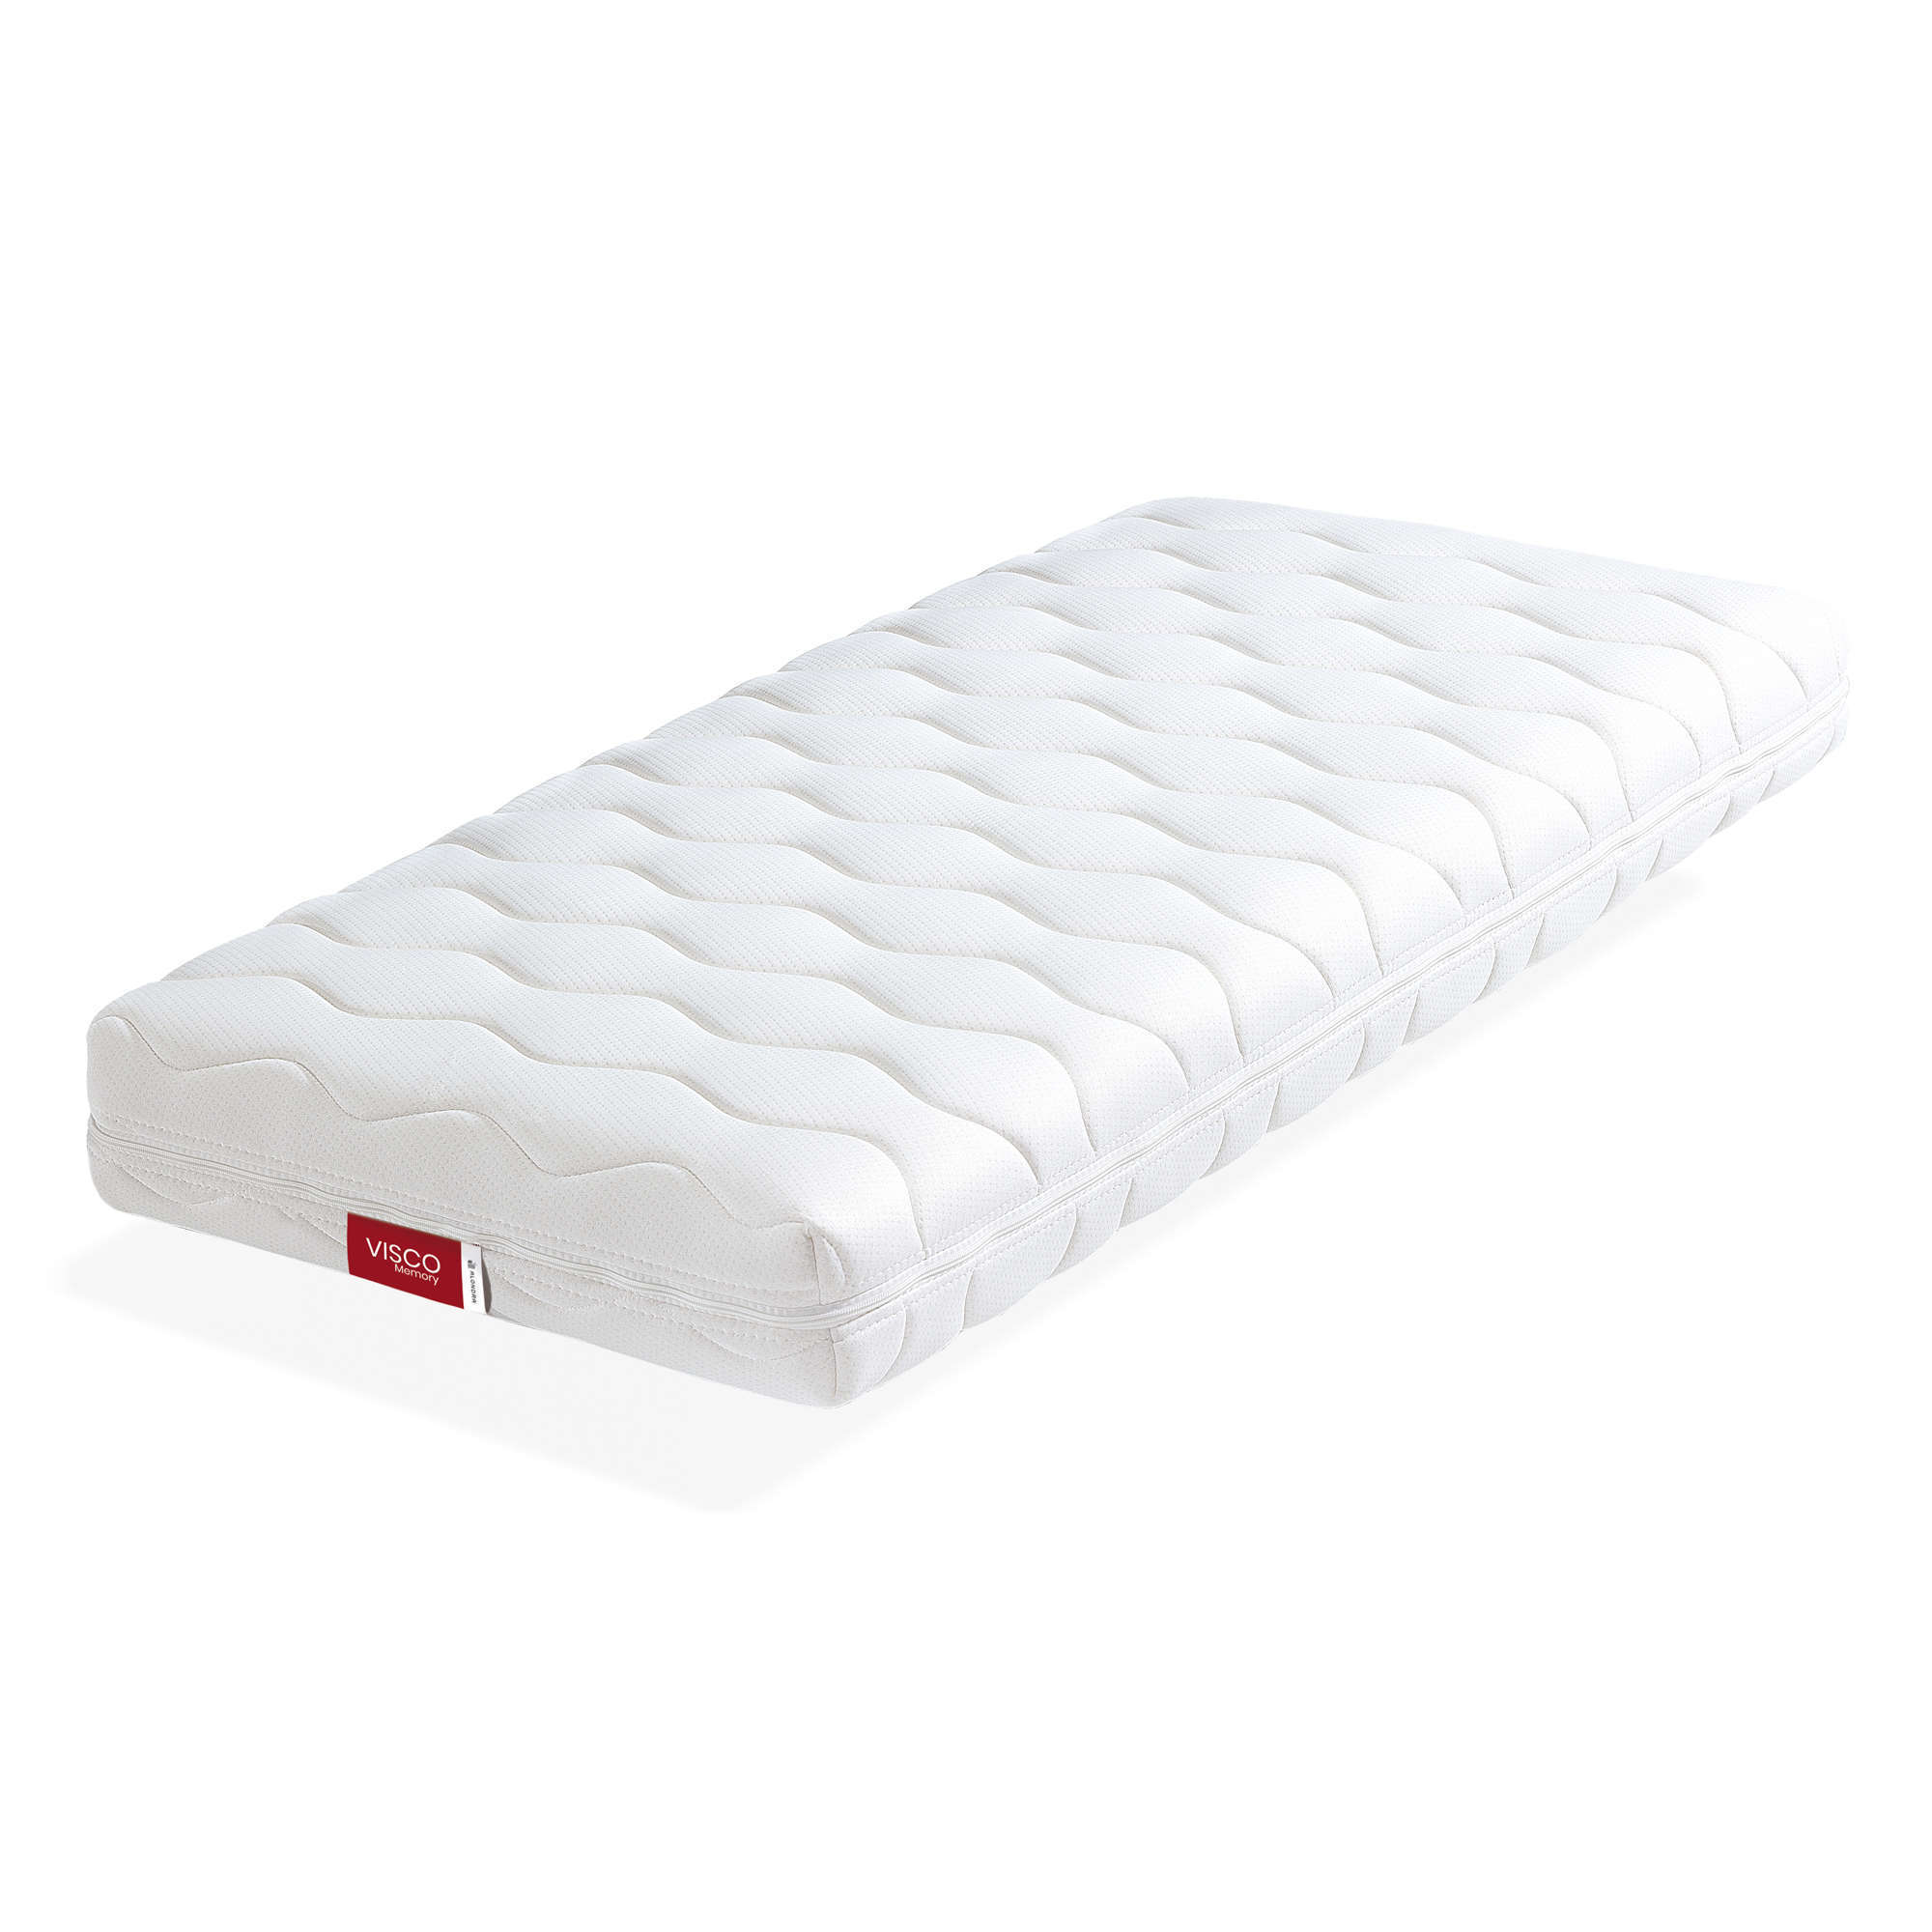 Cot memory foam mattresses 